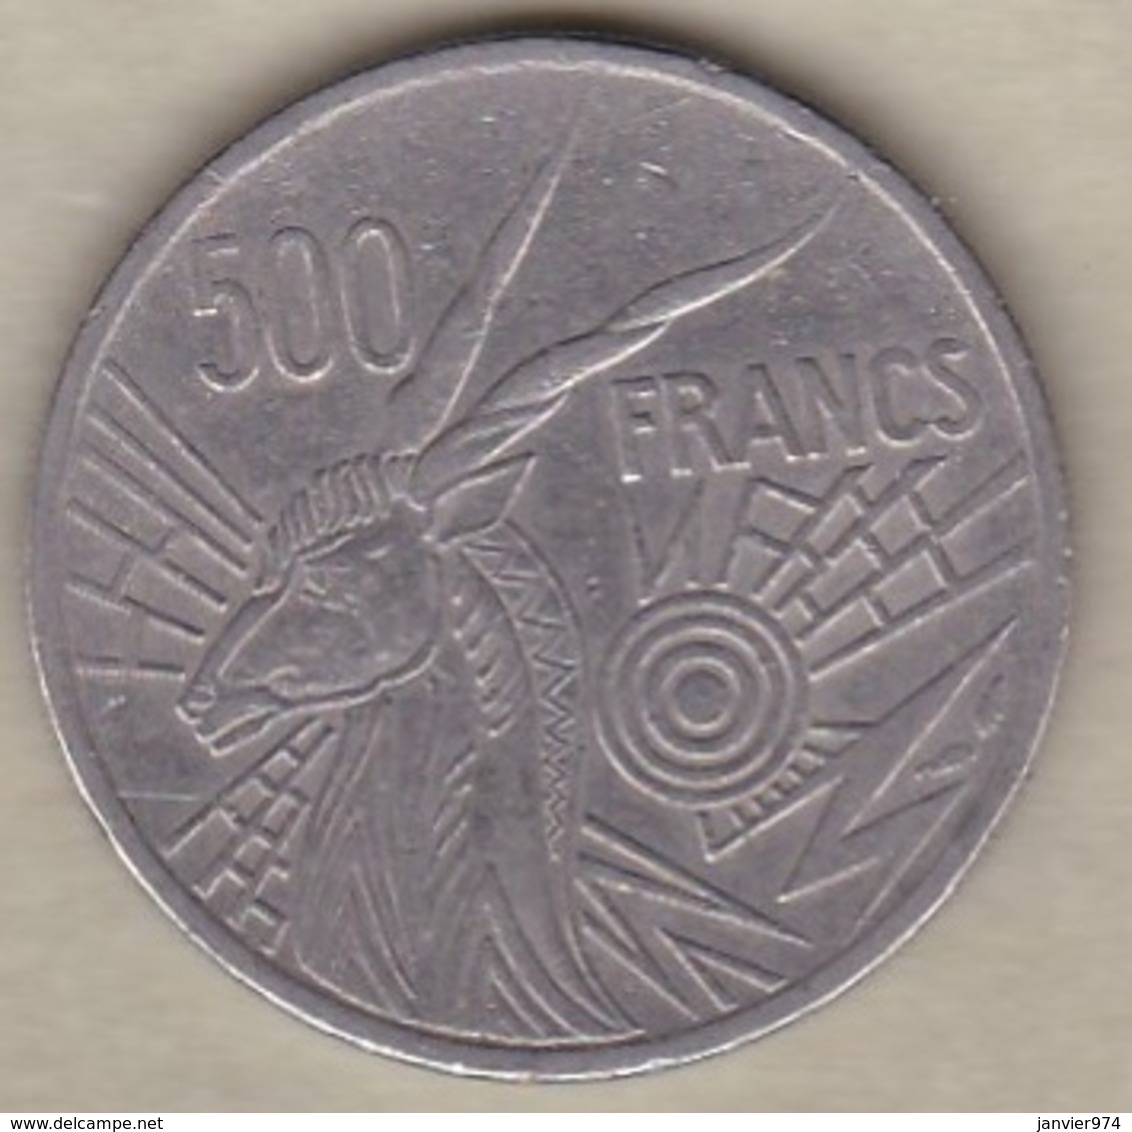 Banque Des Etats De L'Afrique Centrale. 500 Francs 1976 E Cameroun, En Nickel, KM# 12 - Cameroon